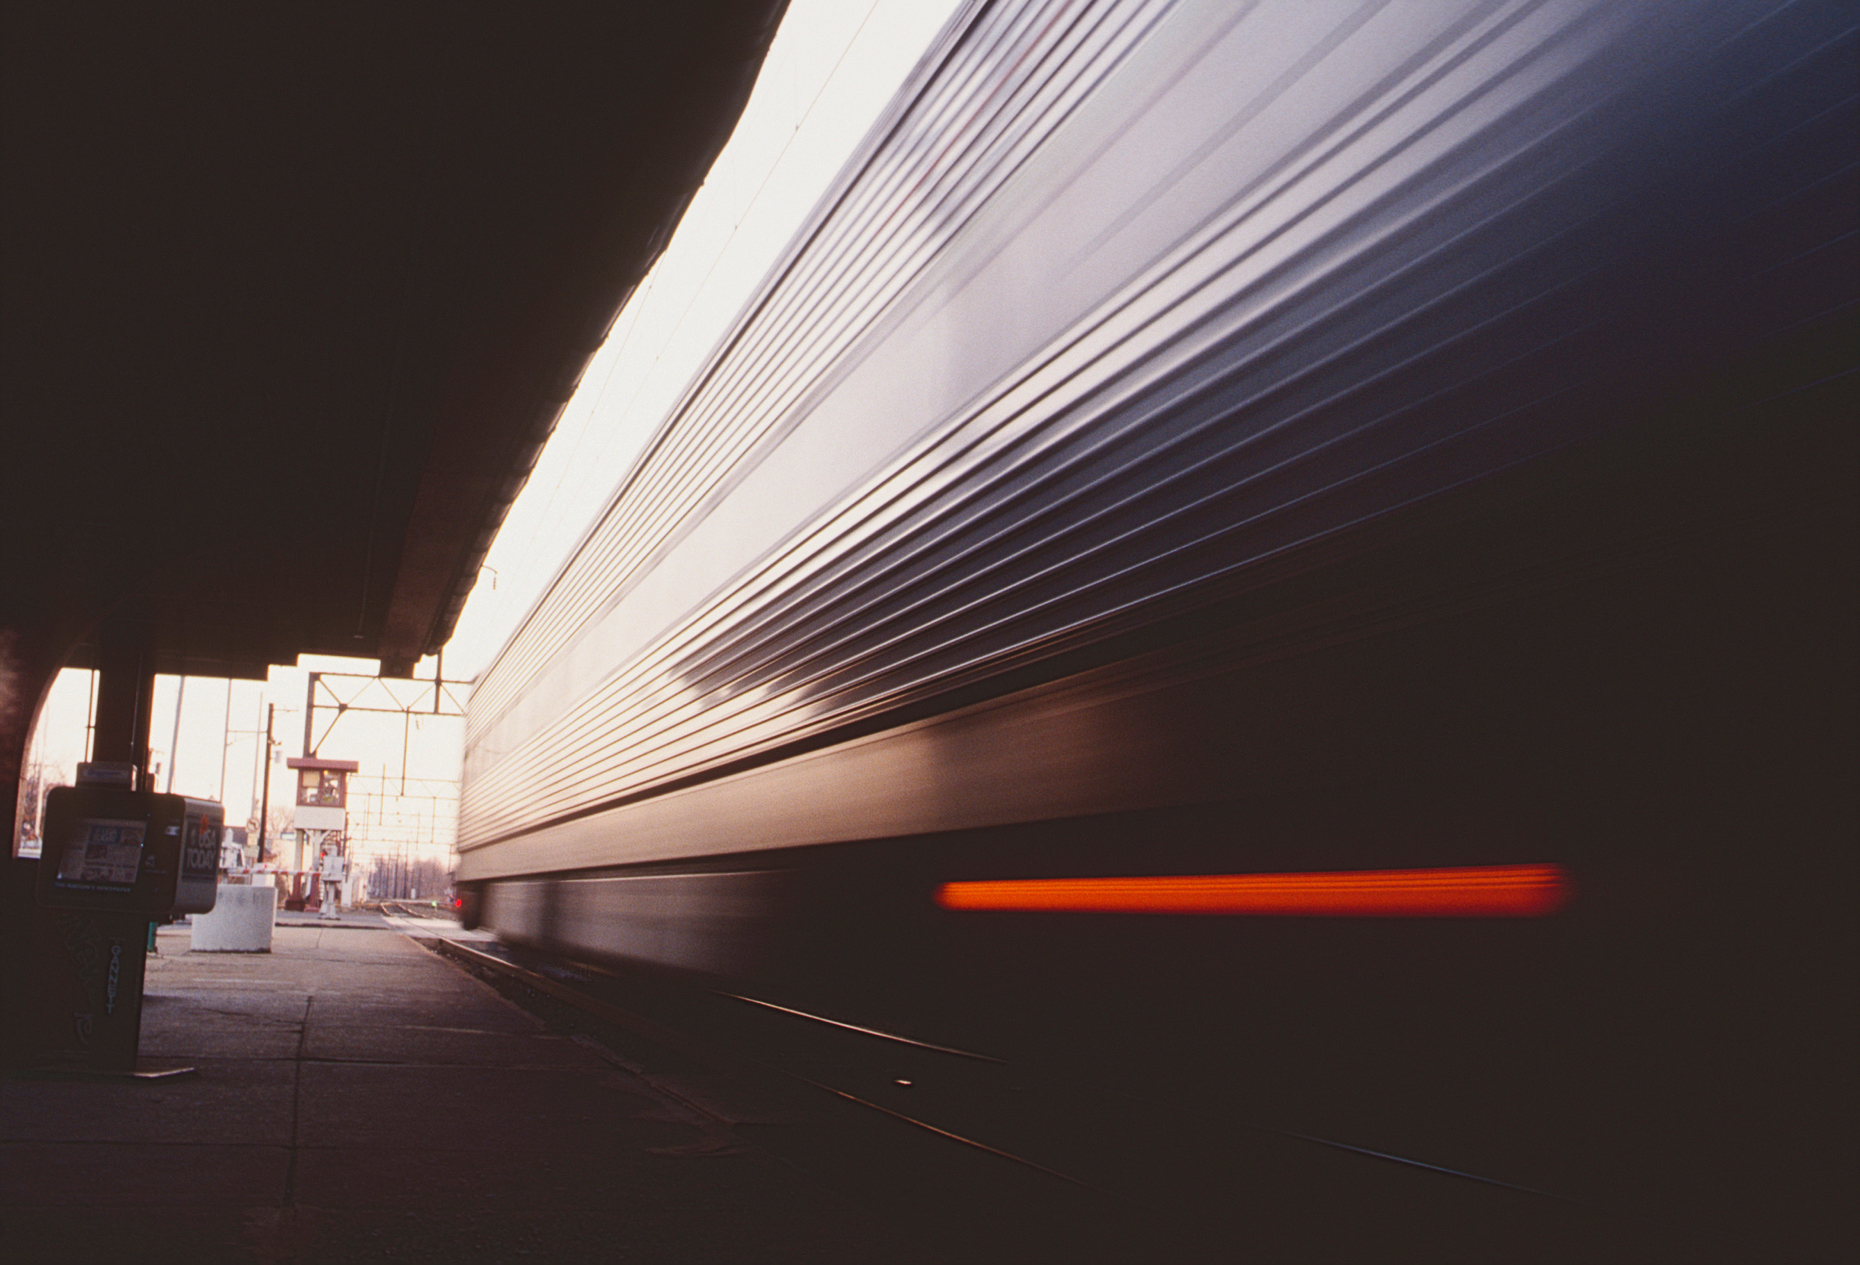 Pan blur motion view of SEPTA commuter train car leaving station